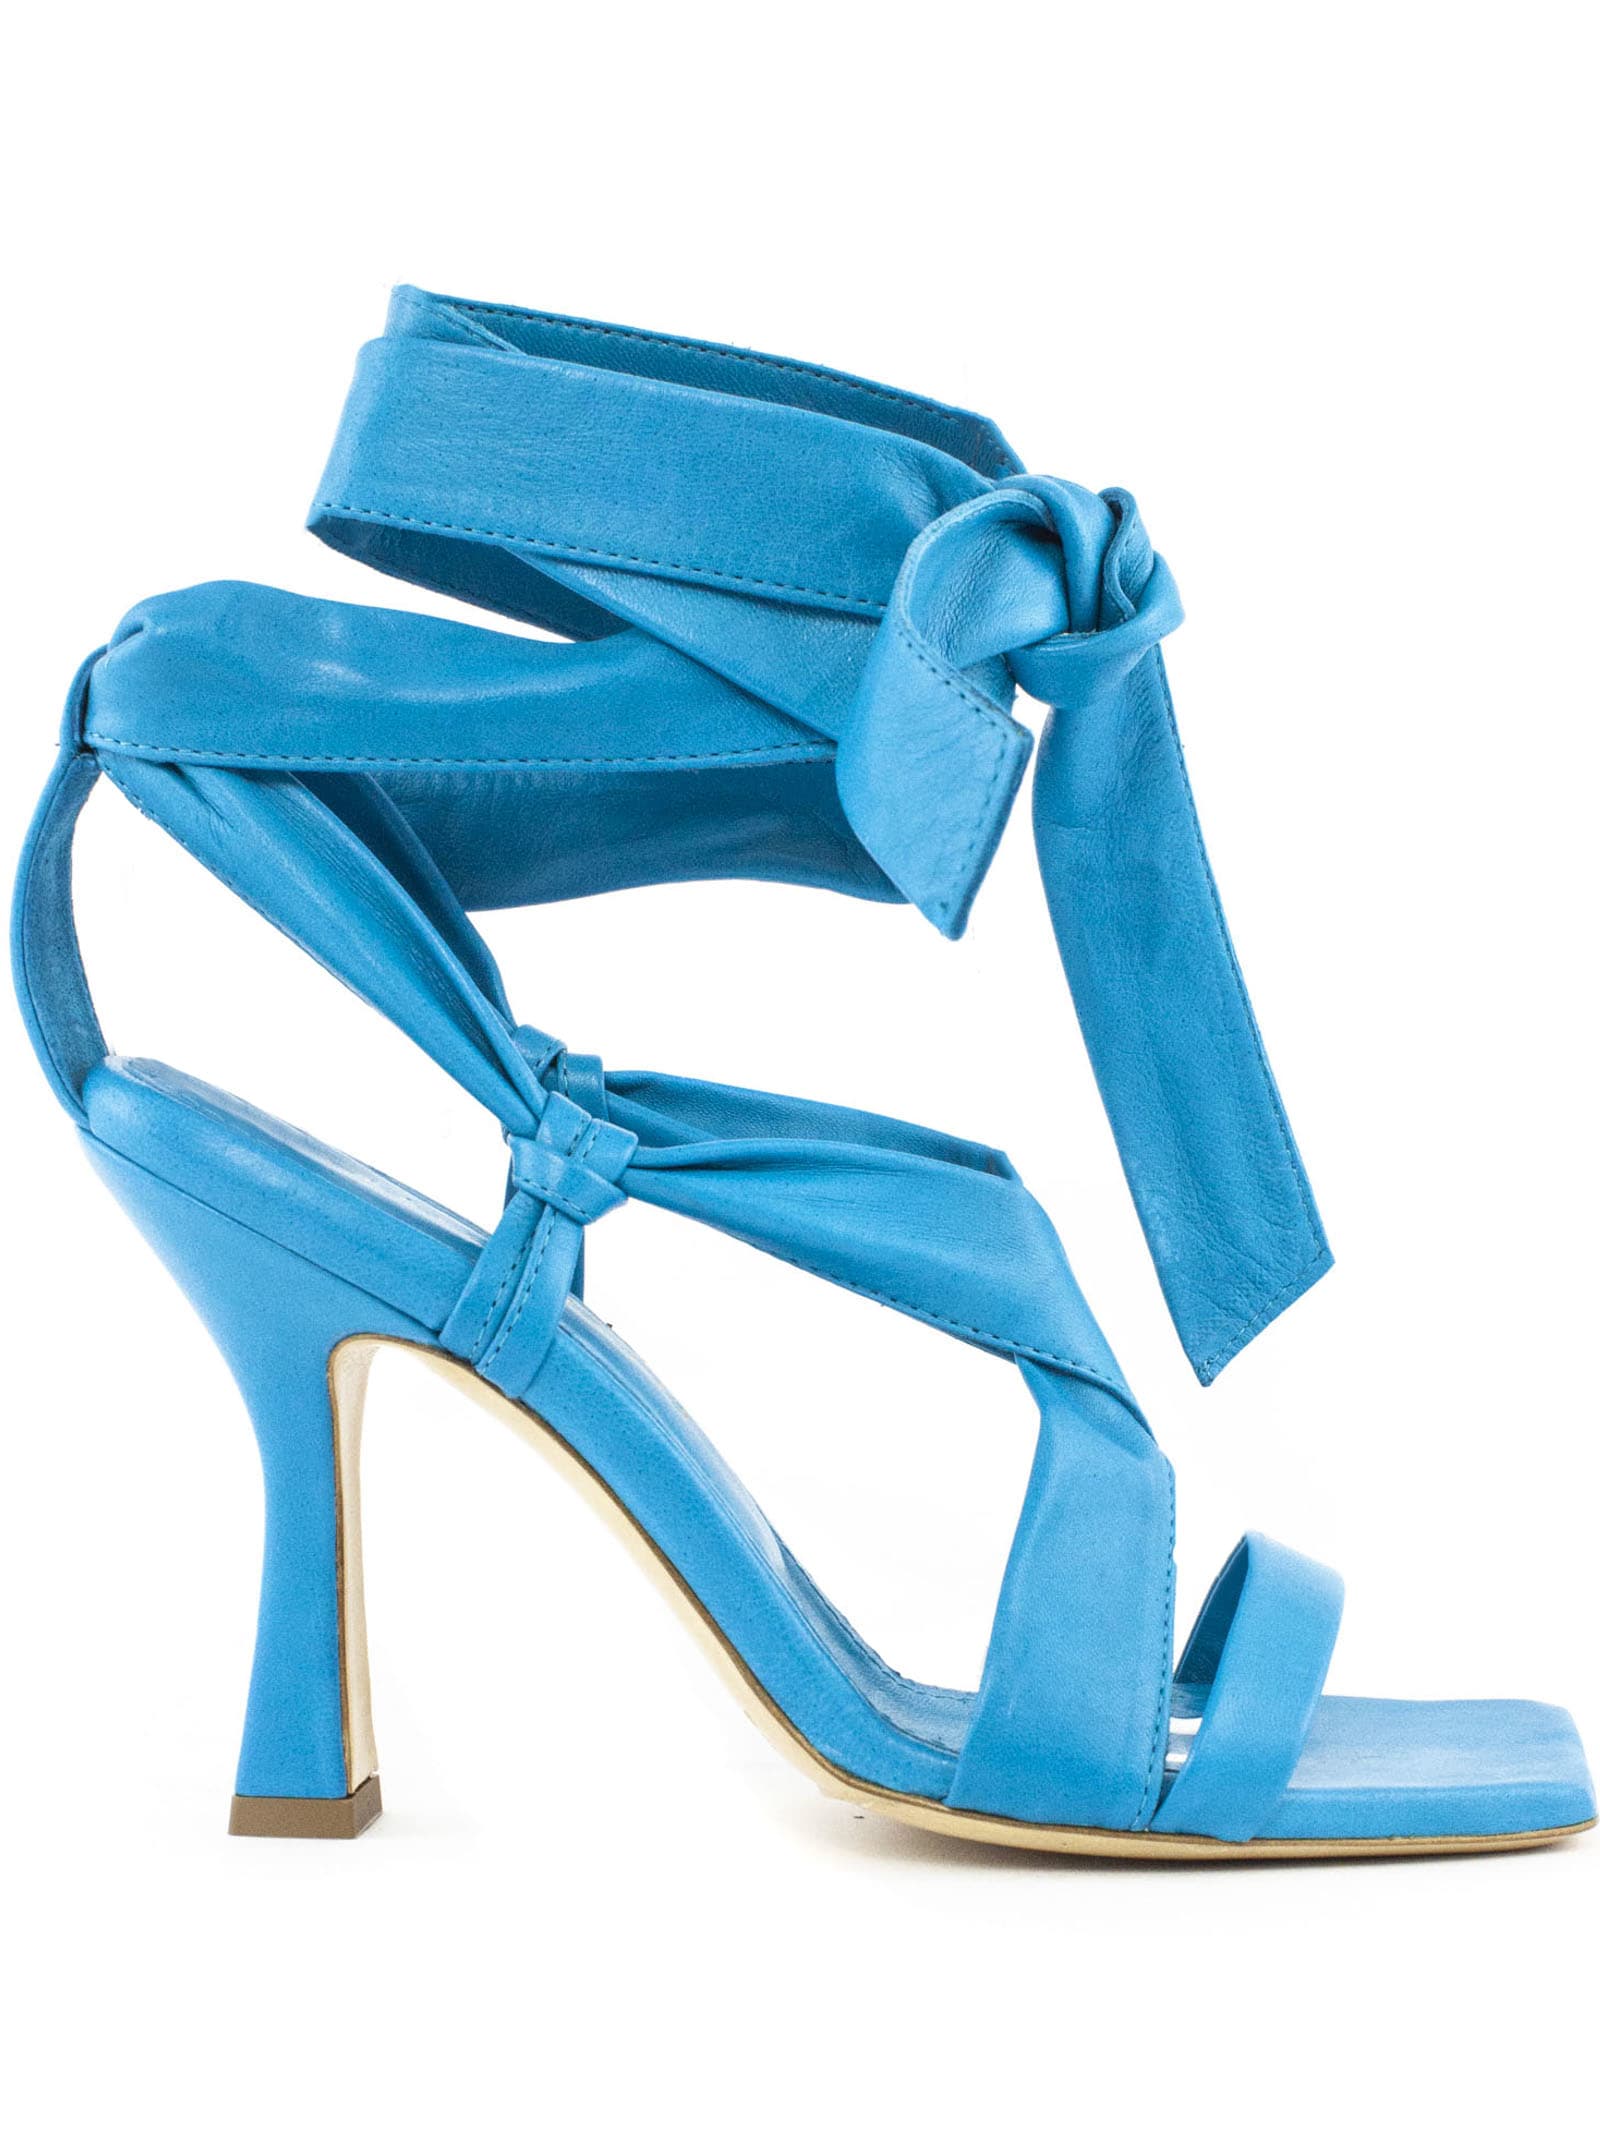 Aldo Castagna Giuliana Blue Leather Sandal